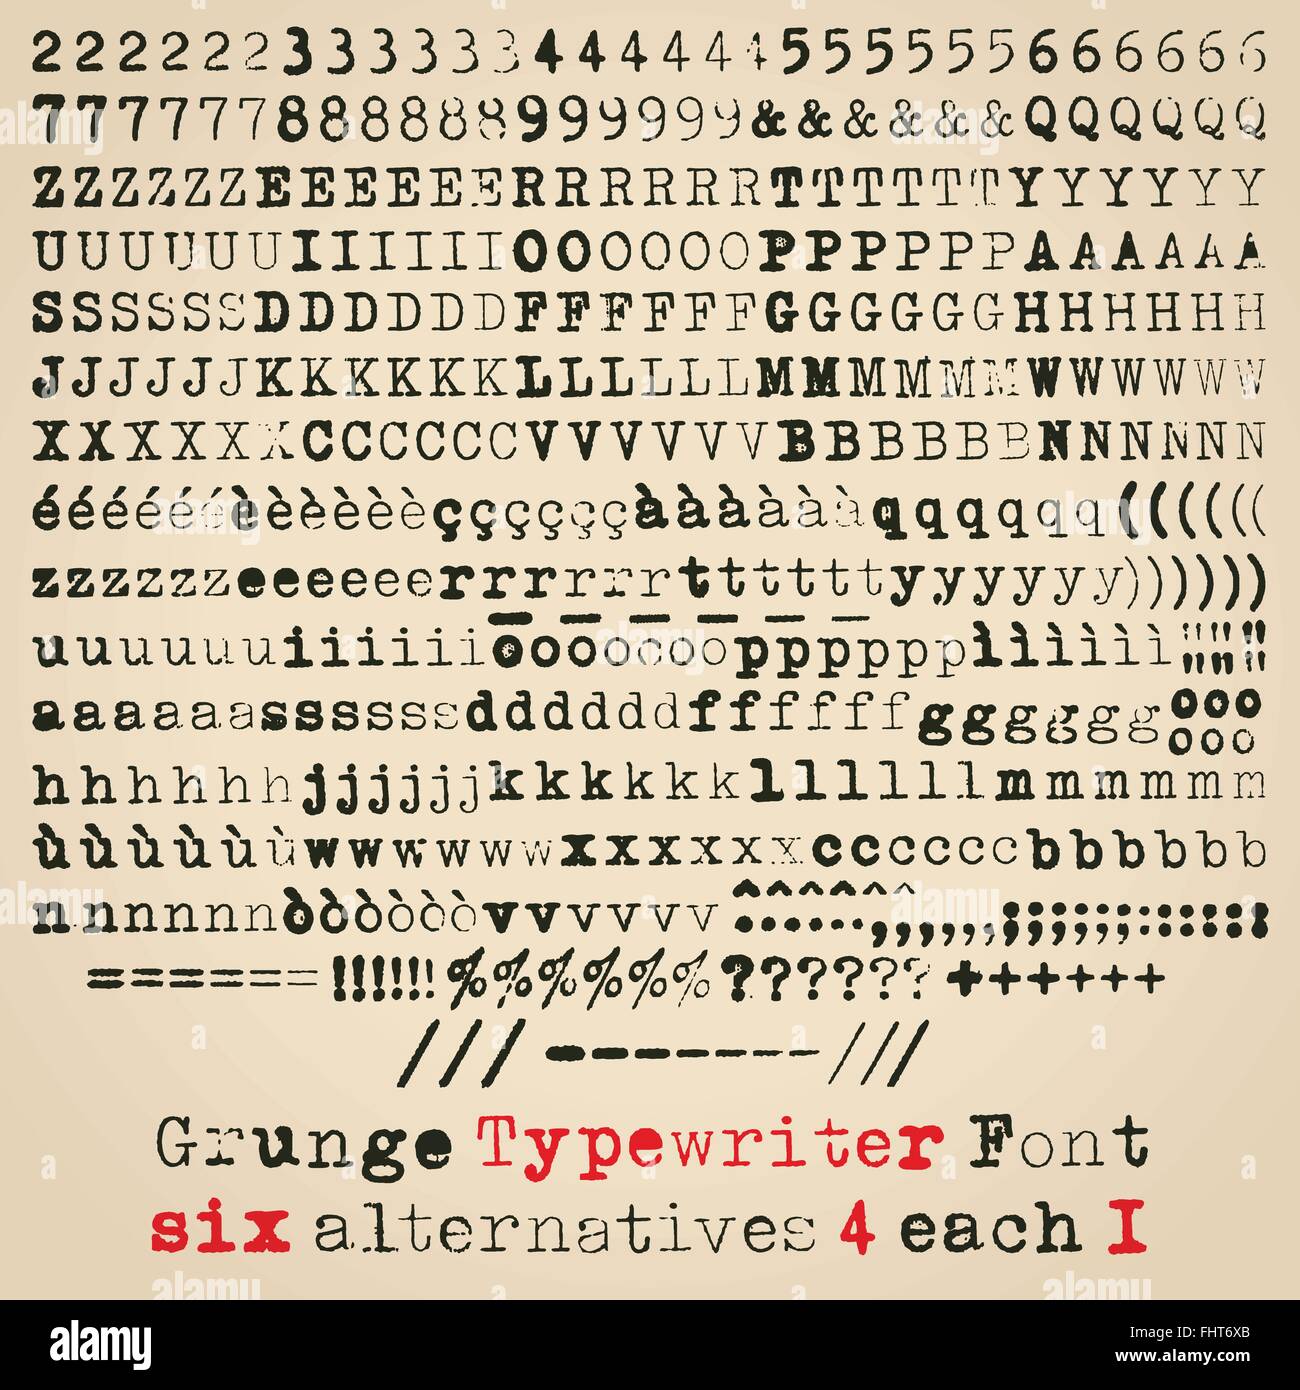 Grunge typewriter font. Six alternatives for each glyph Stock Vector